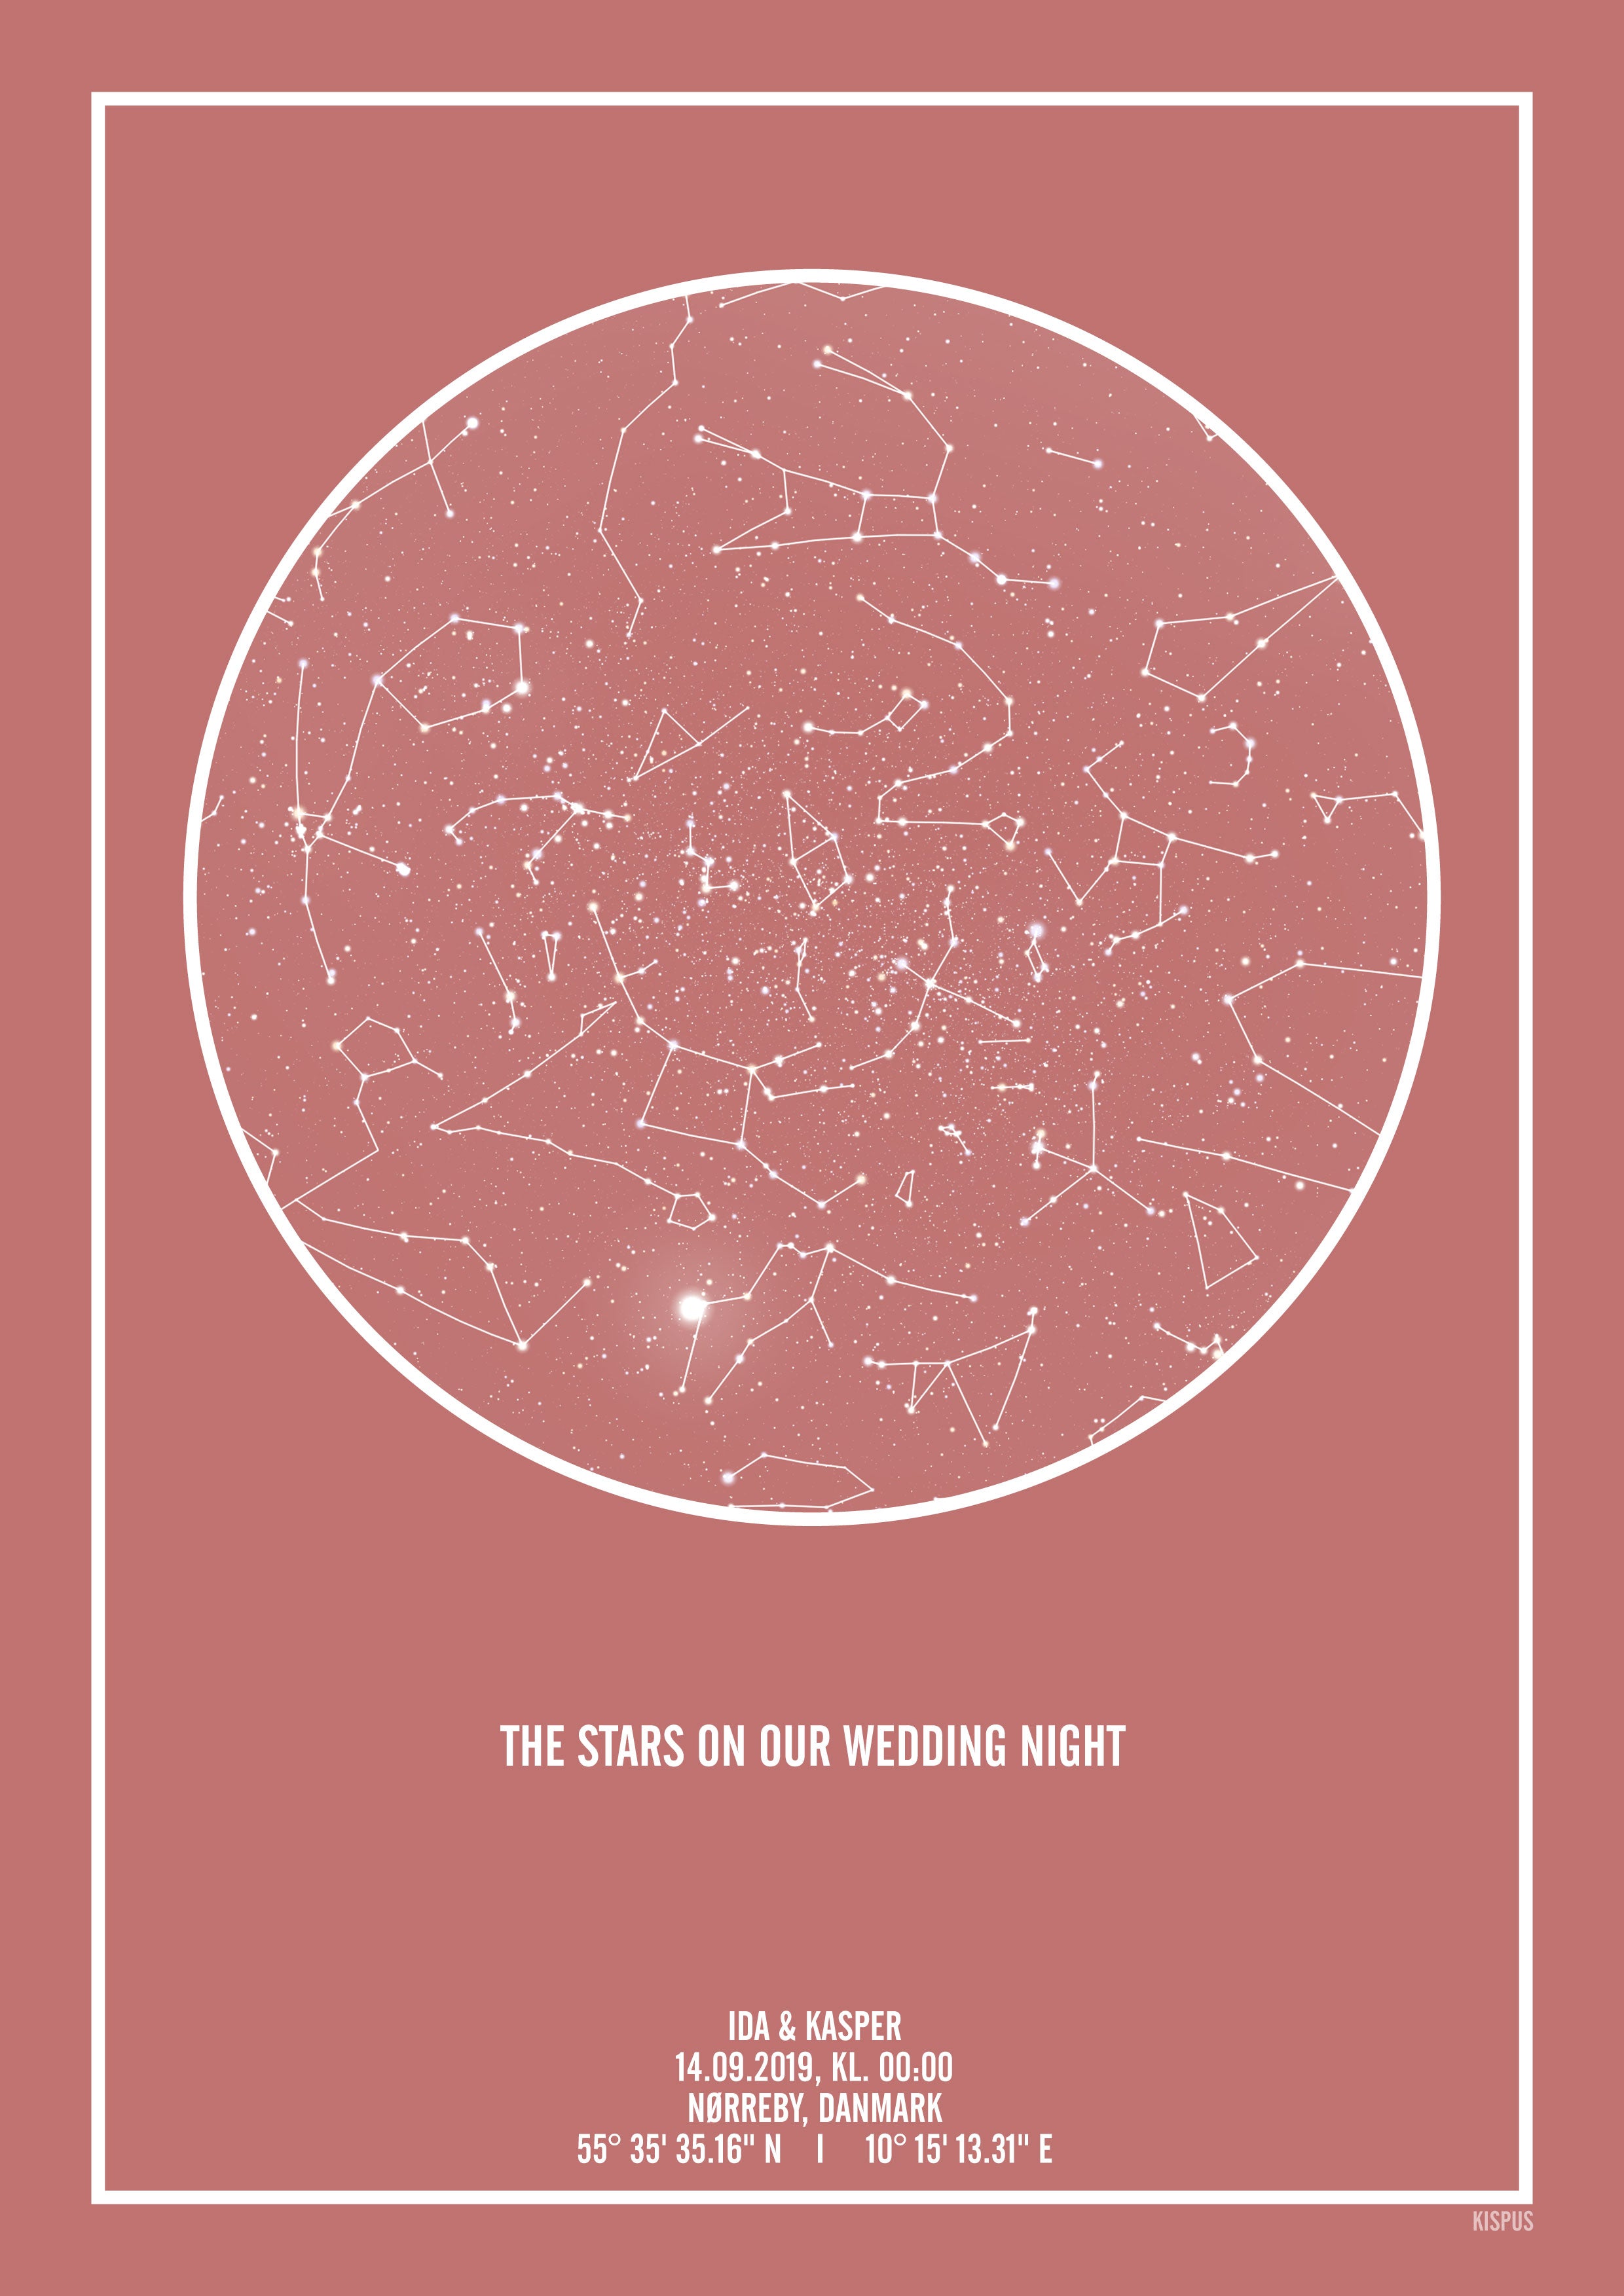 Se PERSONLIG STJERNEHIMMEL PLAKAT (BLUSH) - 50x70 / Hvid tekst + blush-farvet stjernehimmel / Stjernehimmel med stjernebilleder hos KISPUS